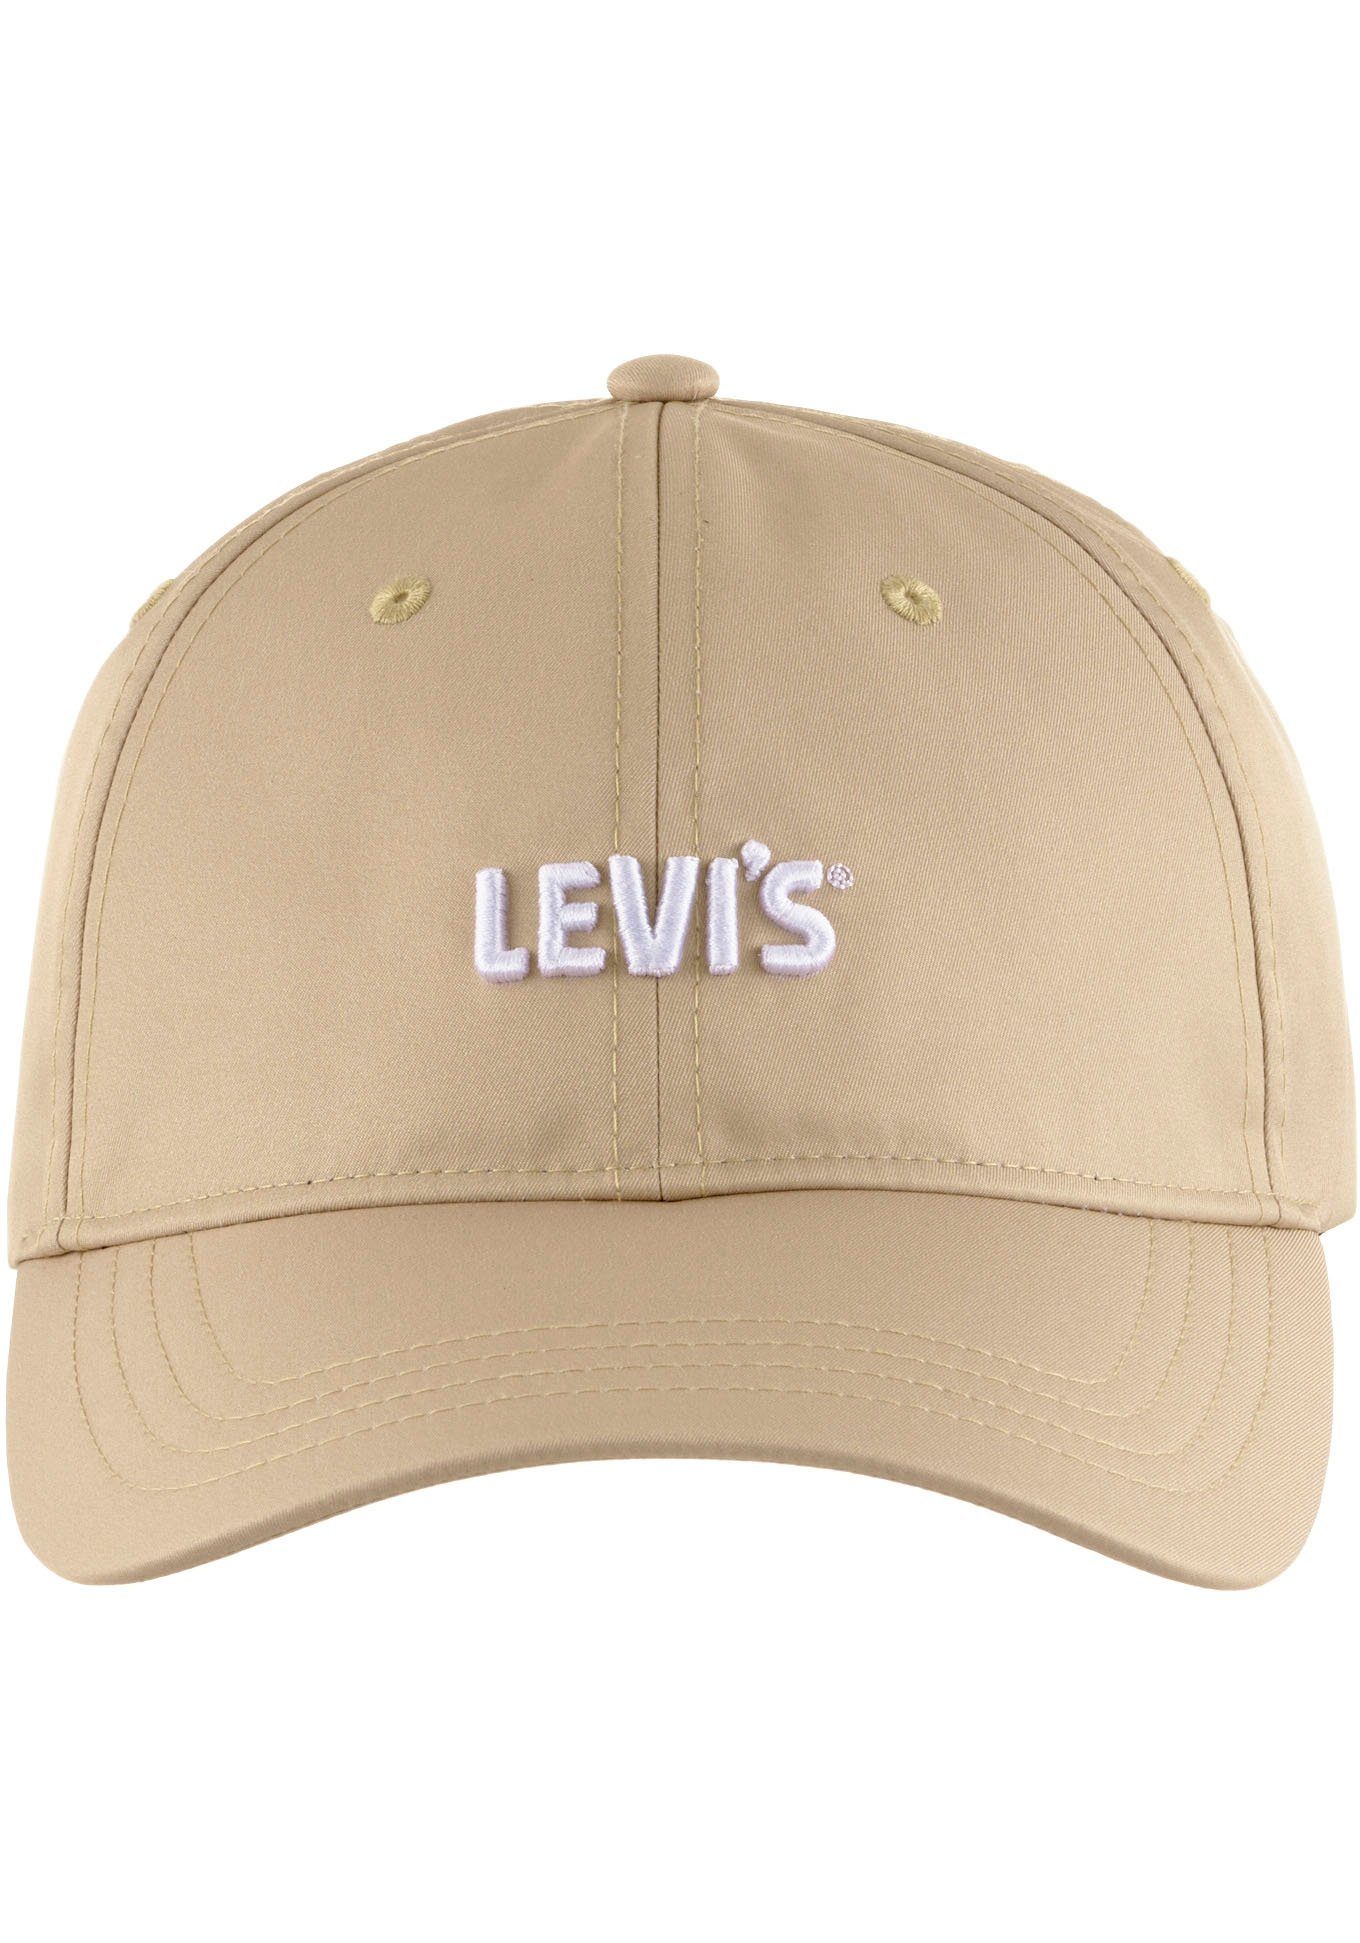 Levi's® Baseball Gold tan natural Tab Cap